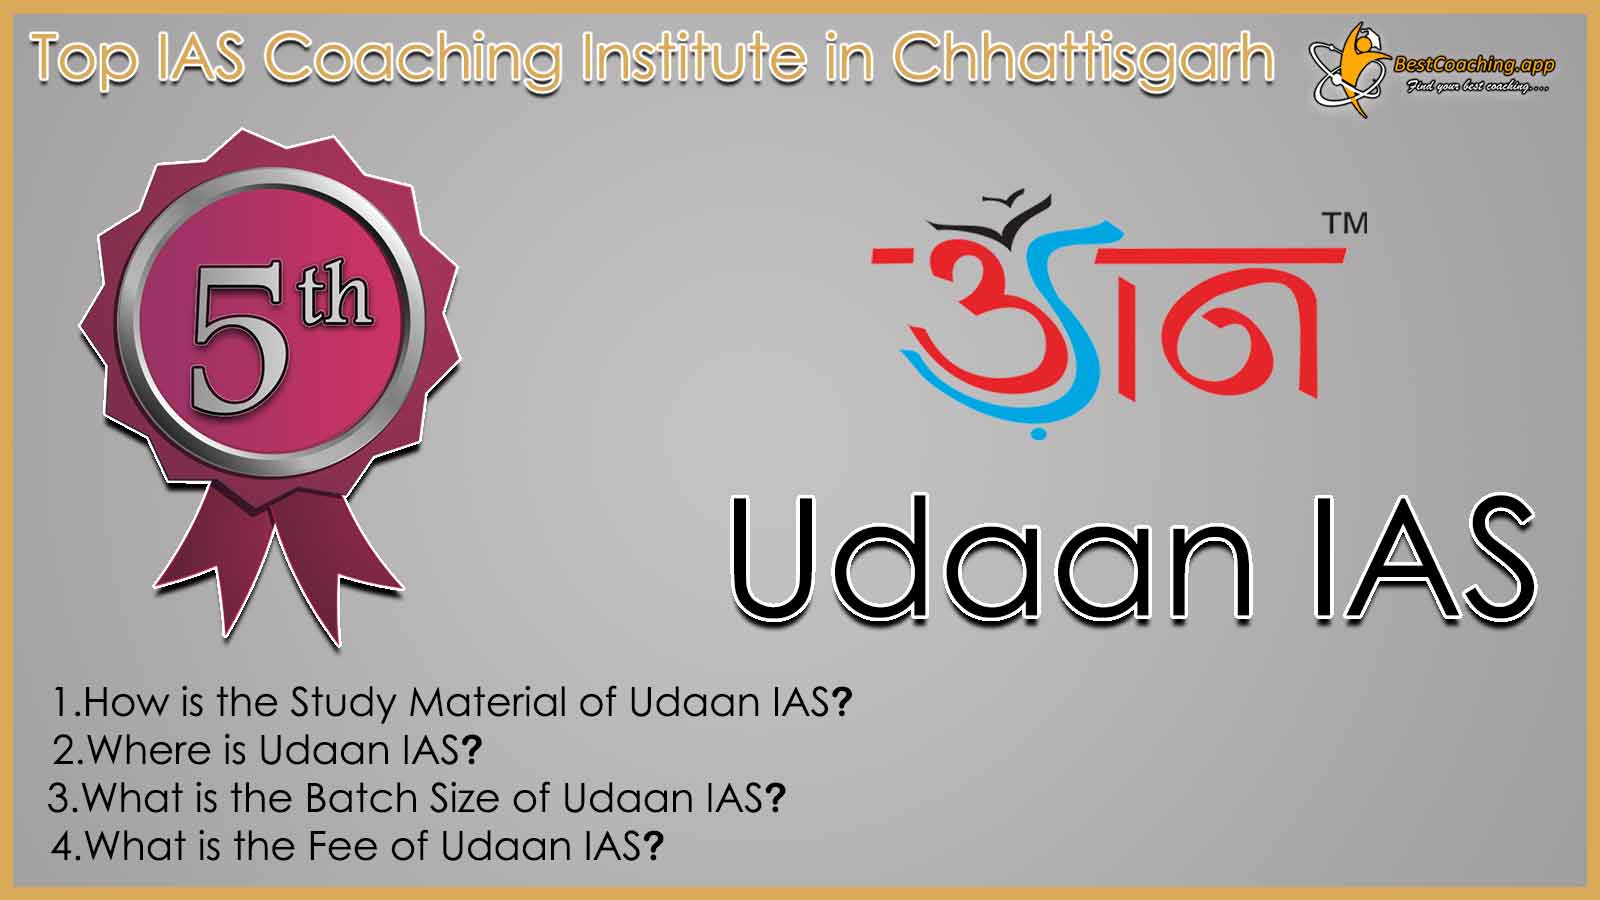 Top IAS Coaching in Chhattisgarh